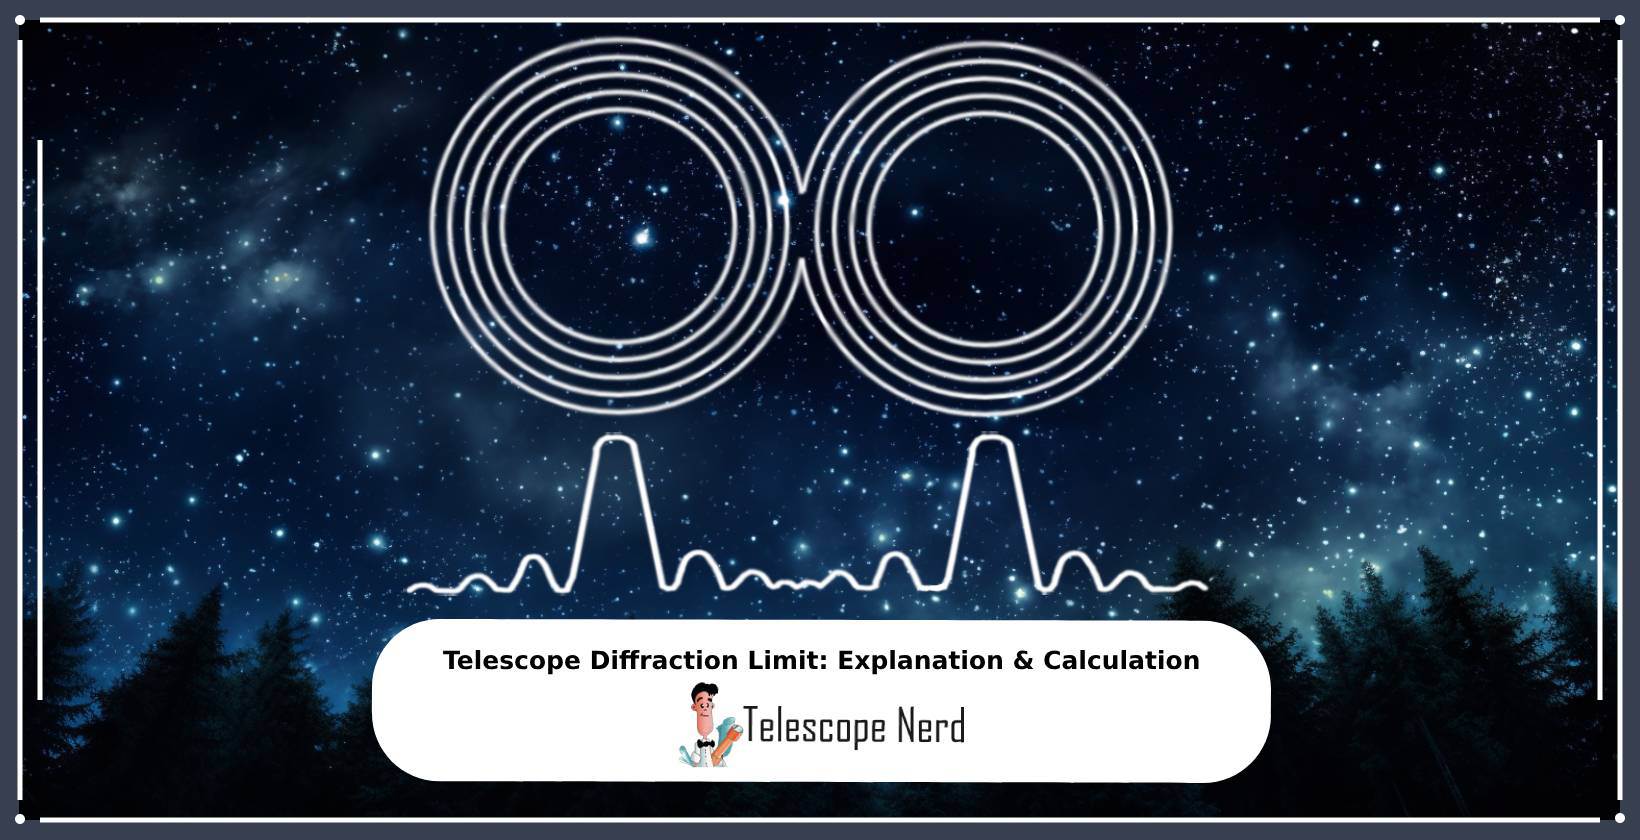 Telescope Diffraction Limit: Explanation & Calculation